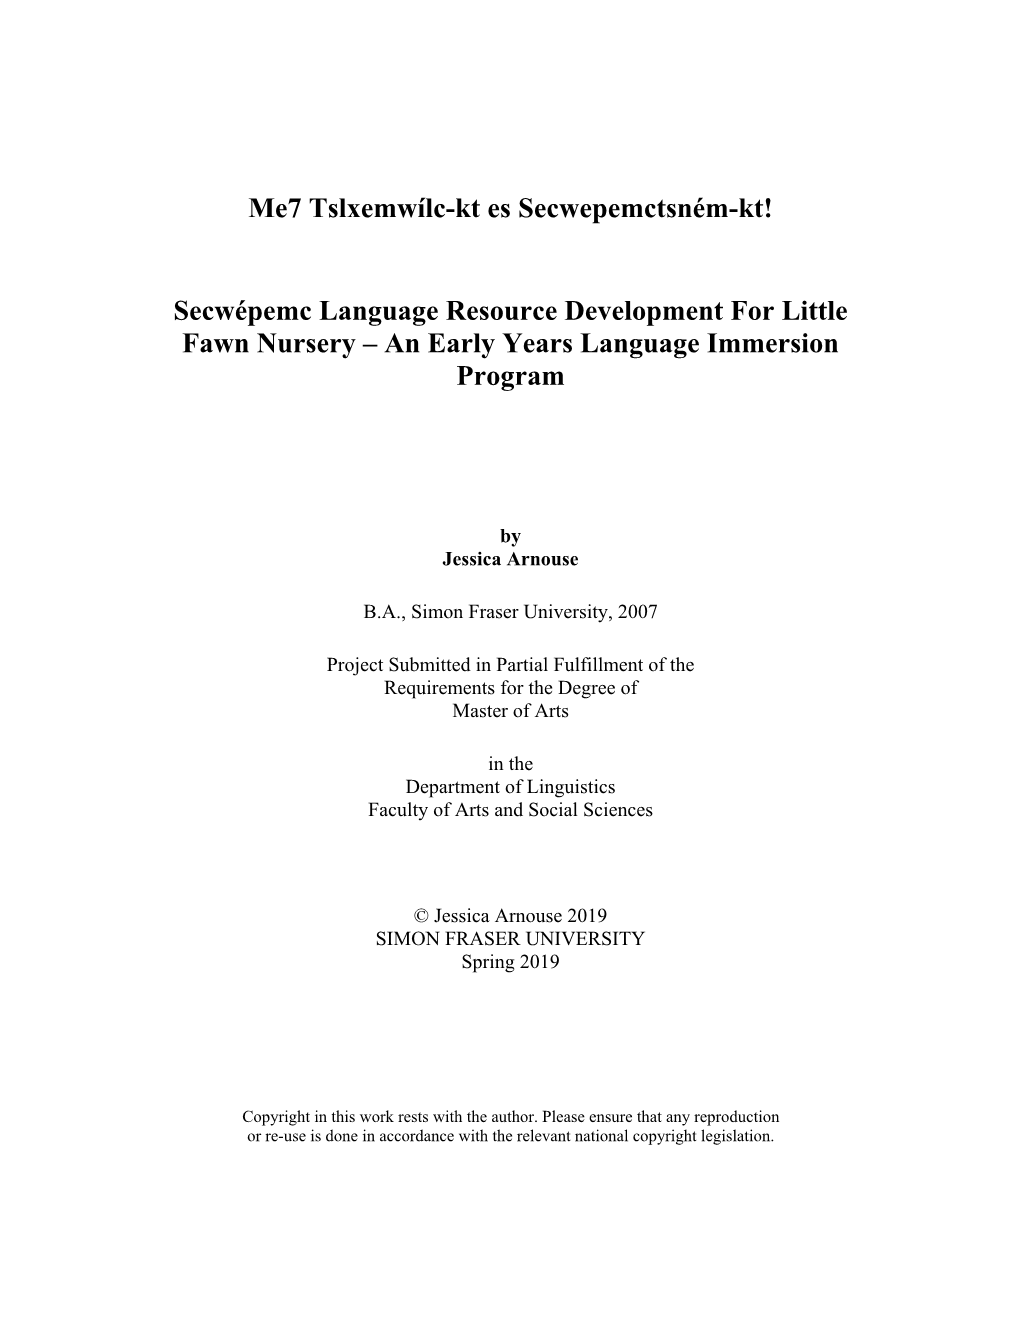 Secwépemc Language Resource Development for Little Fawn Nursery – an Early Years Language Immersion Program